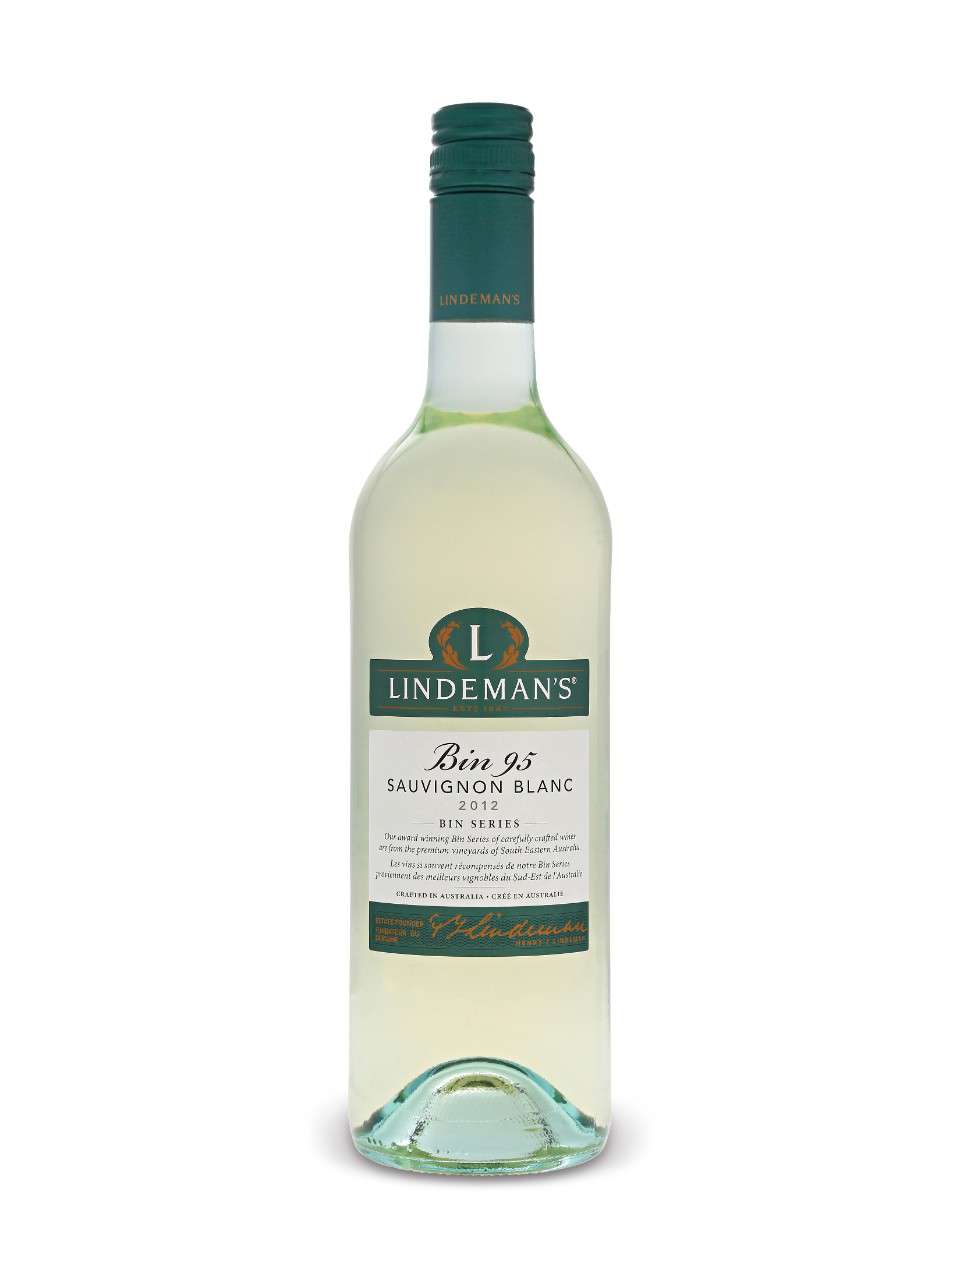 Lindeman's bin 95 Sauvignon Blanc (Australia) 2014 75cl